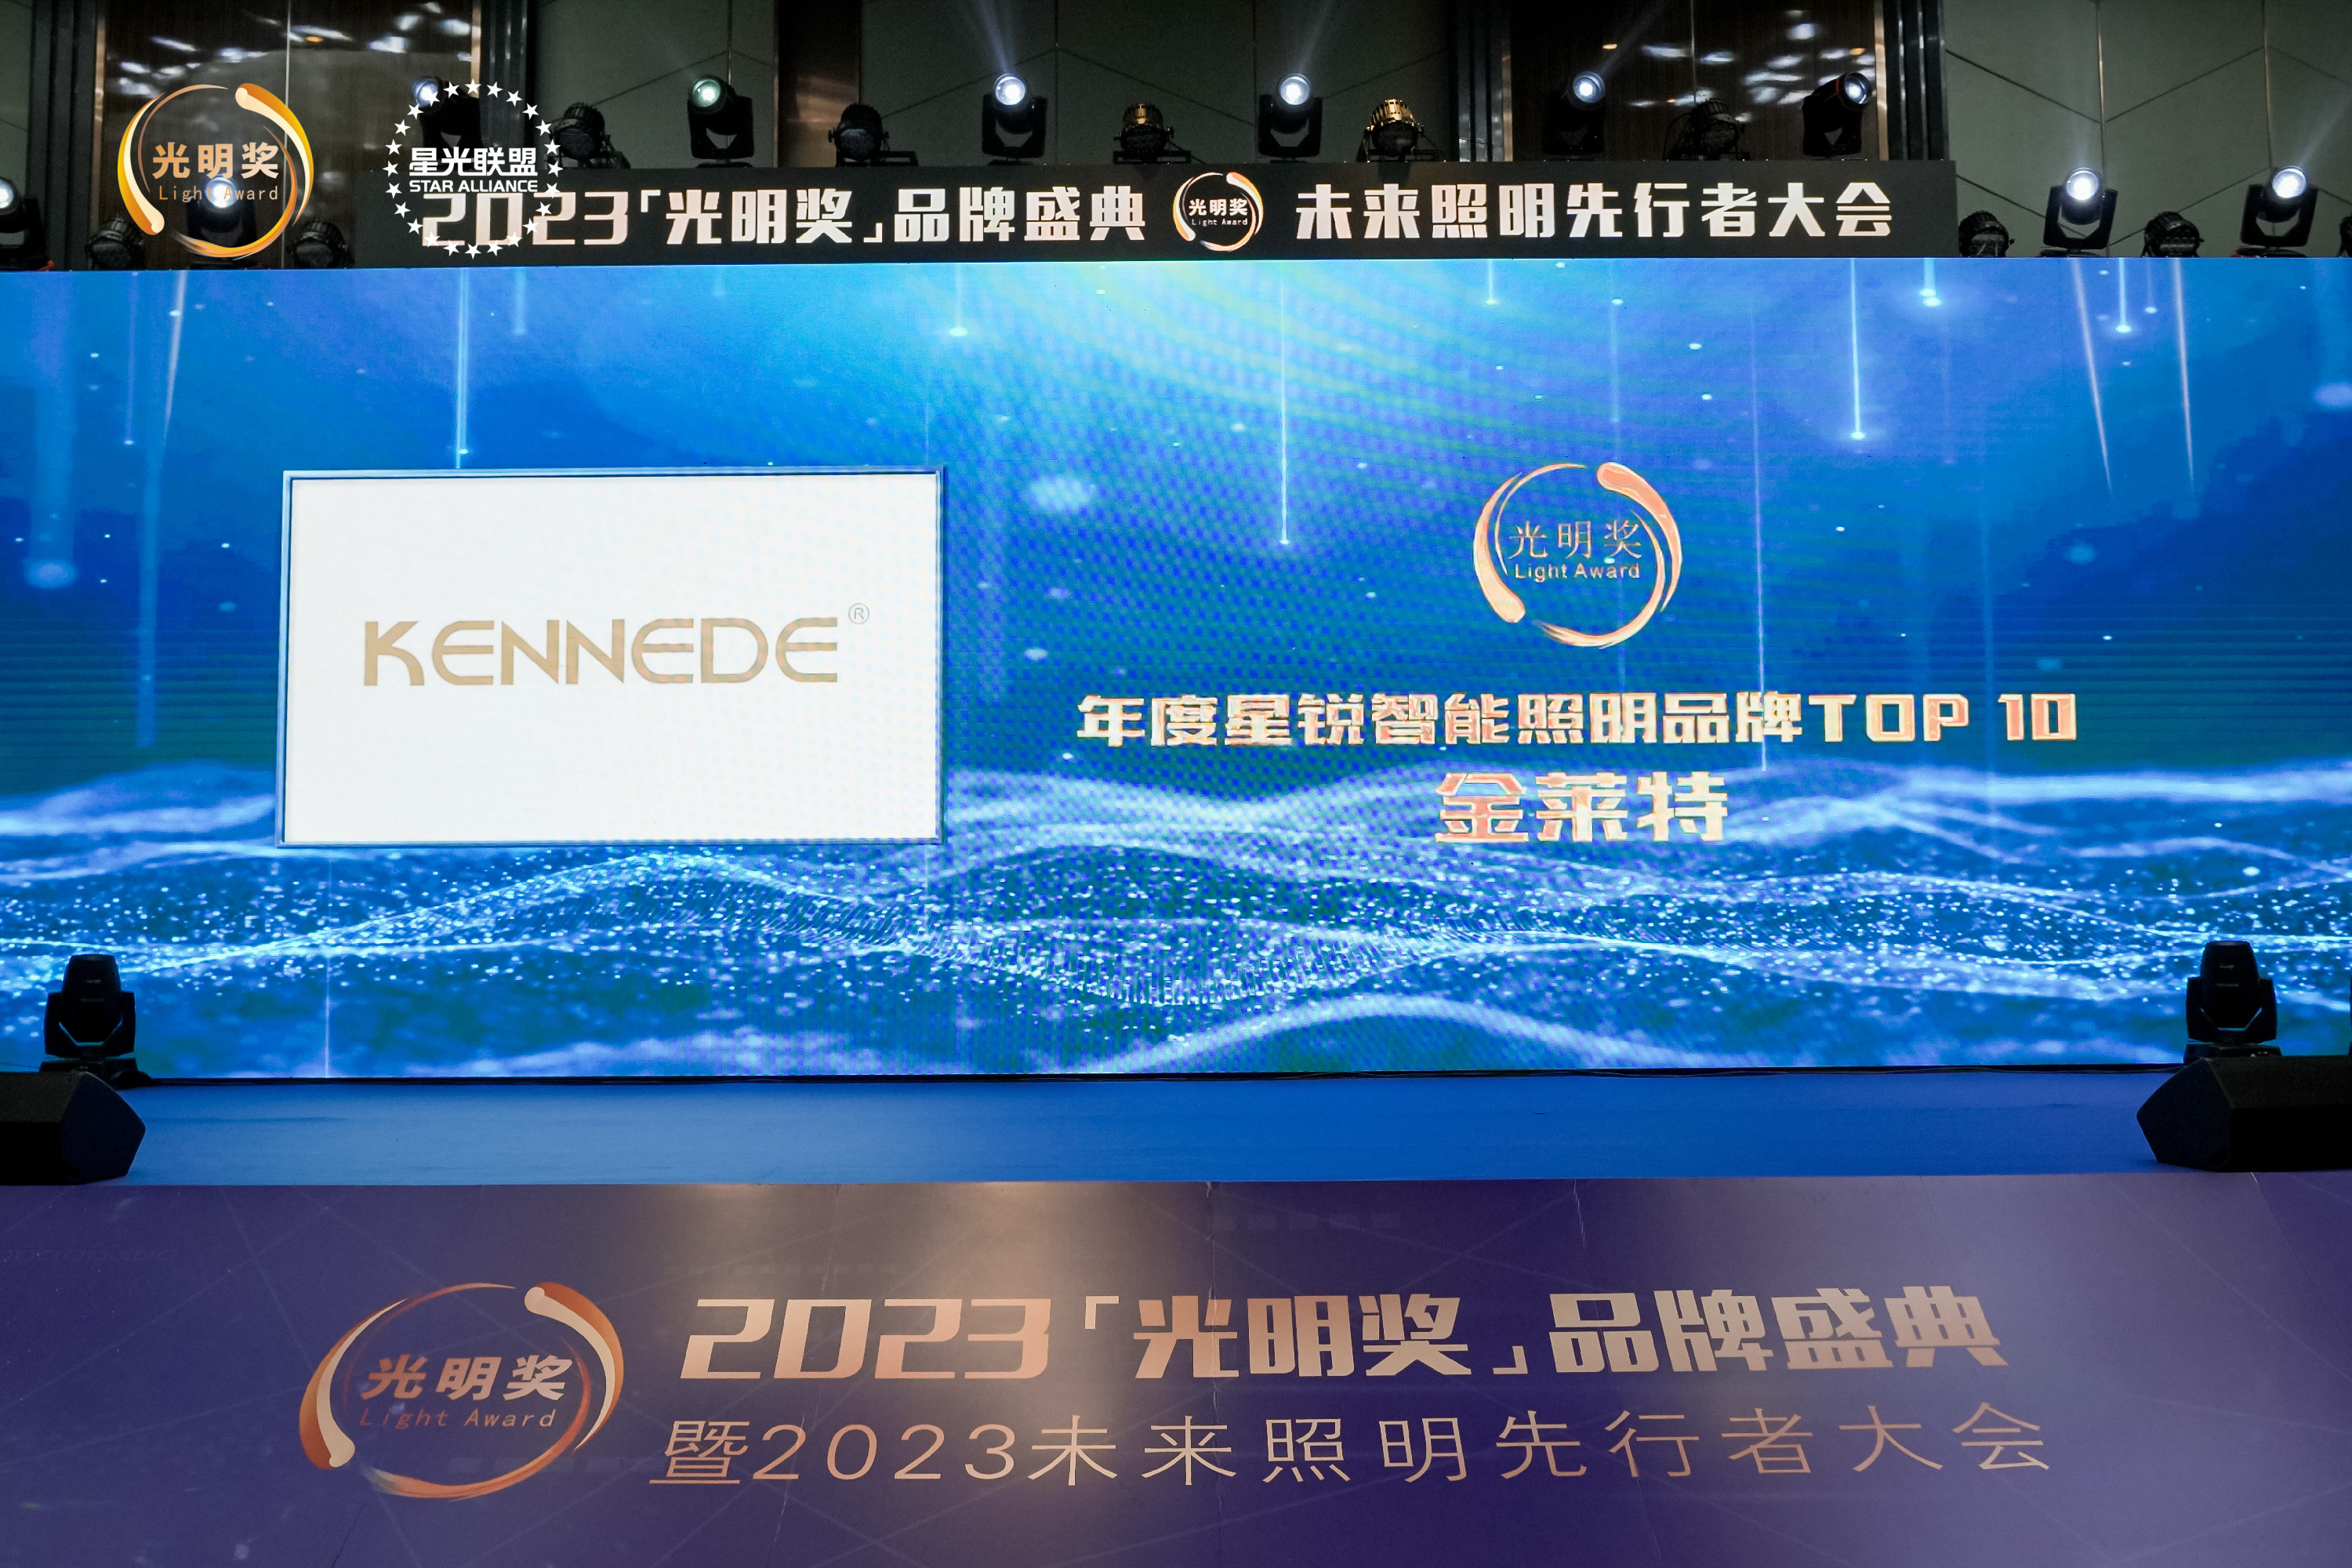 KENNEDE Wins "Star Smart Lighting Brand" Award at 2023 "Bright Award" Ceremony